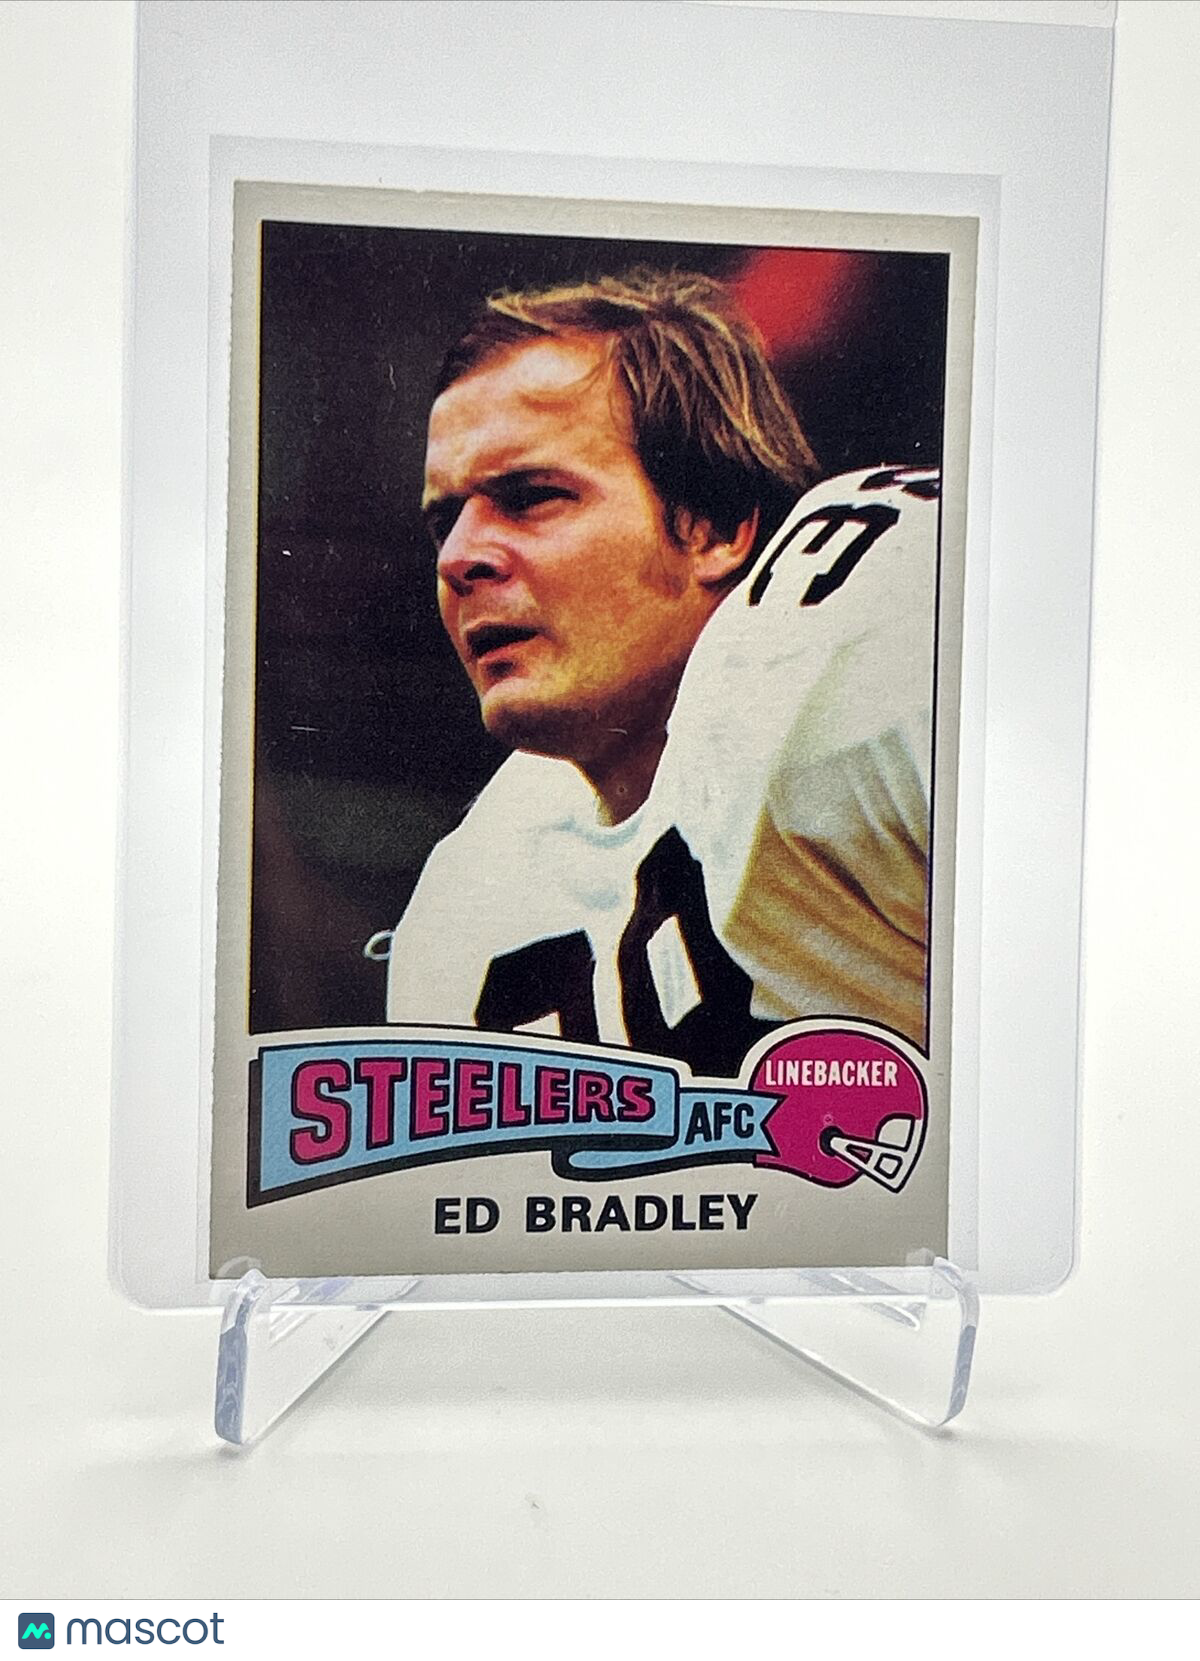 1975 Topps Ed Bradley Rookie Football Card #396 NM Quality FREE SHIPPING